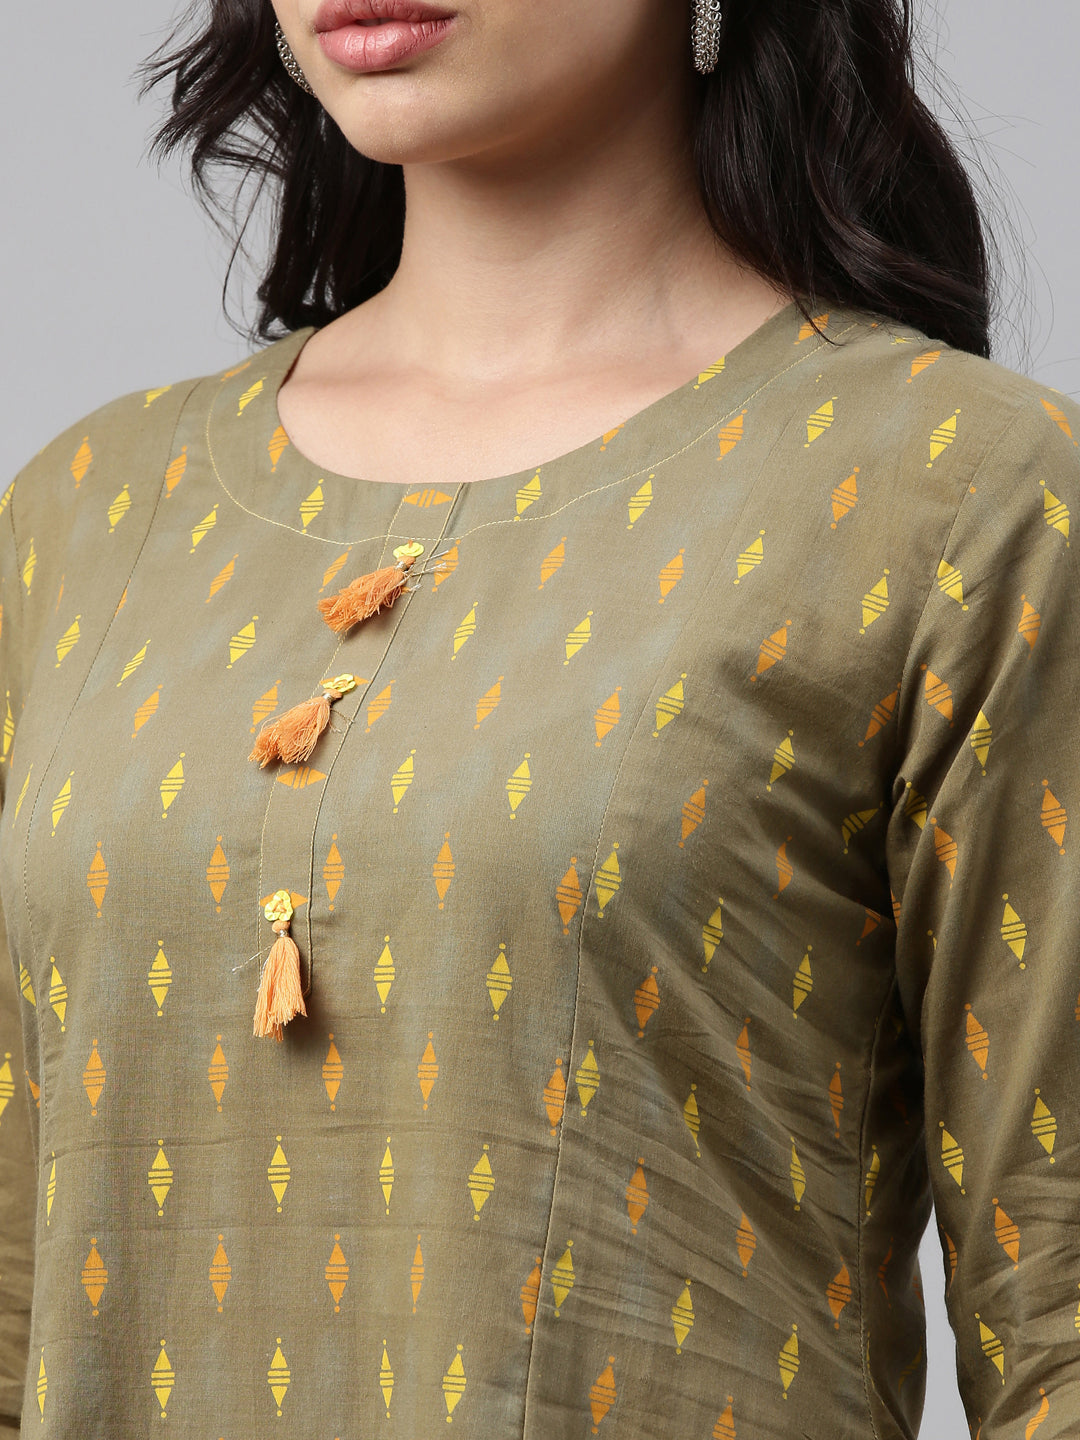 Neeru's Olive Color Cotton Print Fabric Tunic